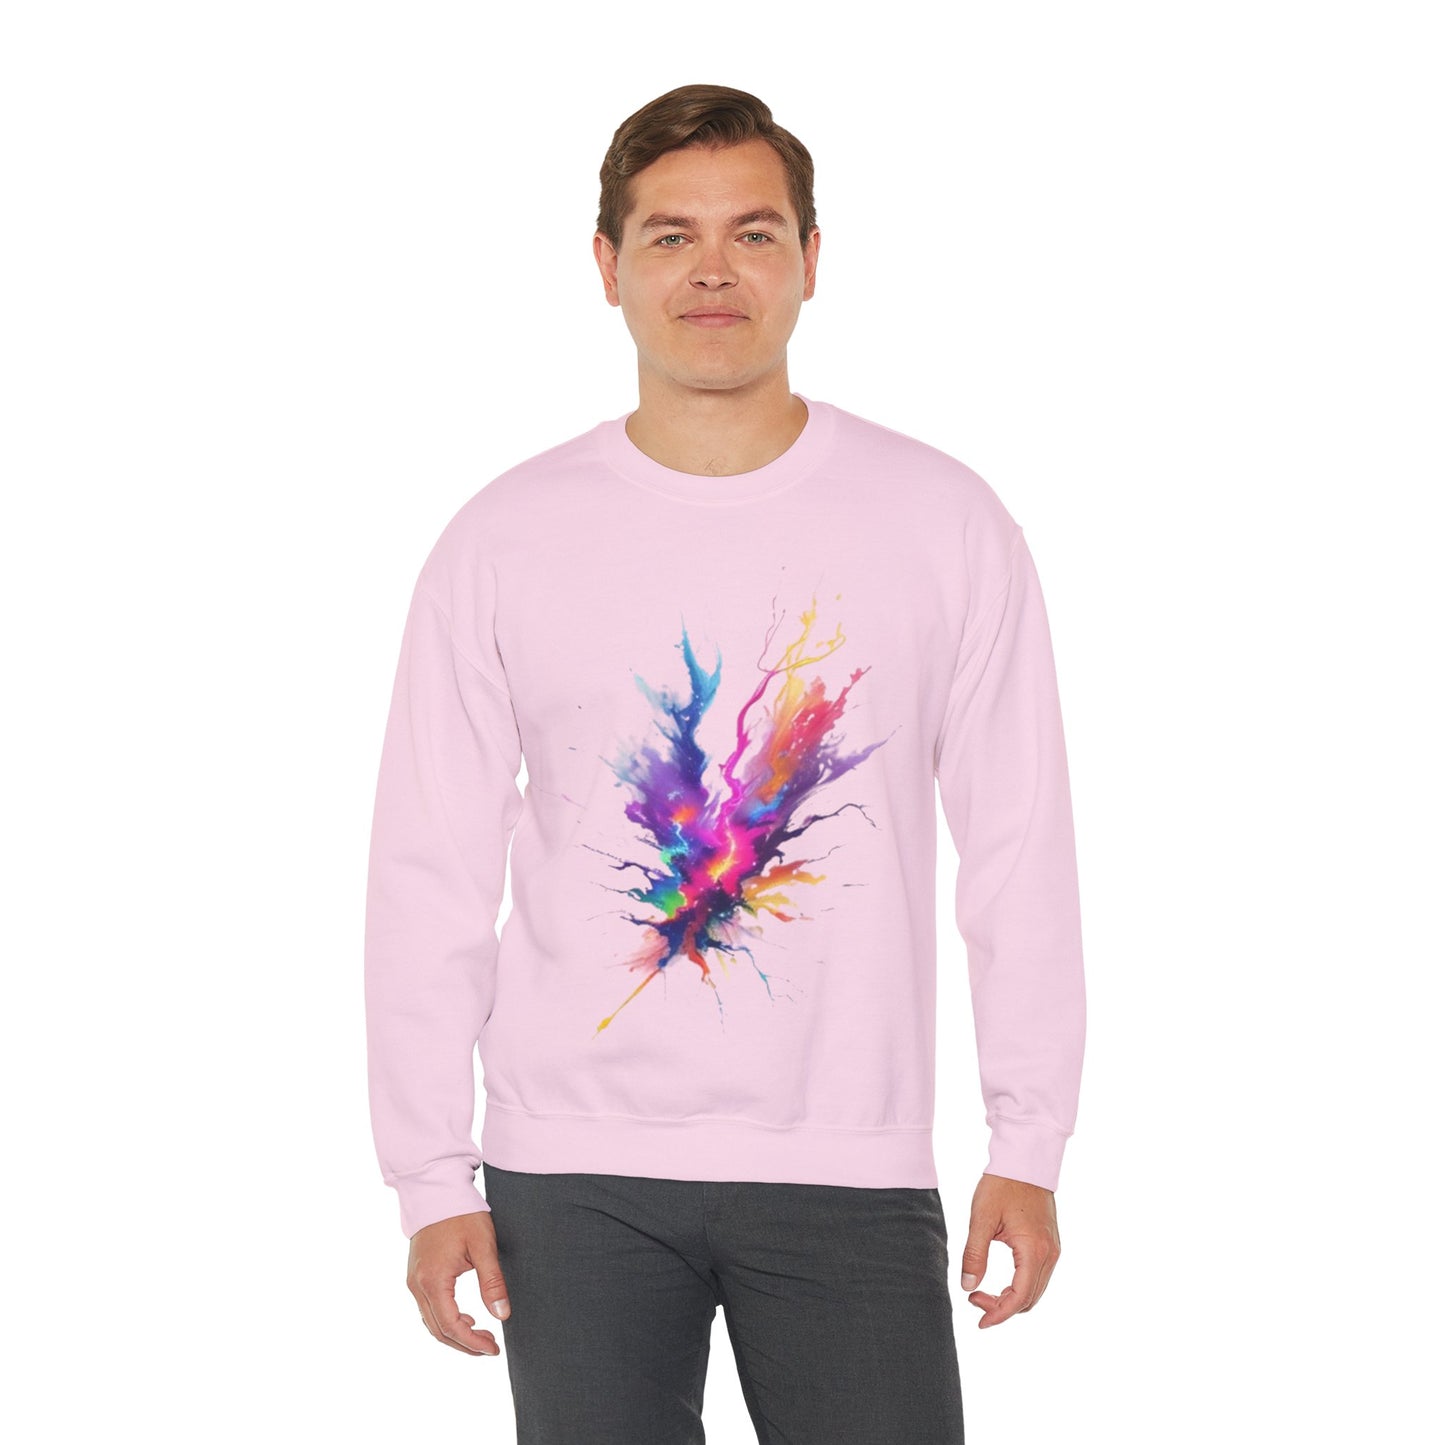 Messy Colourful Lightning Bolts - Unisex Crewneck Sweatshirt